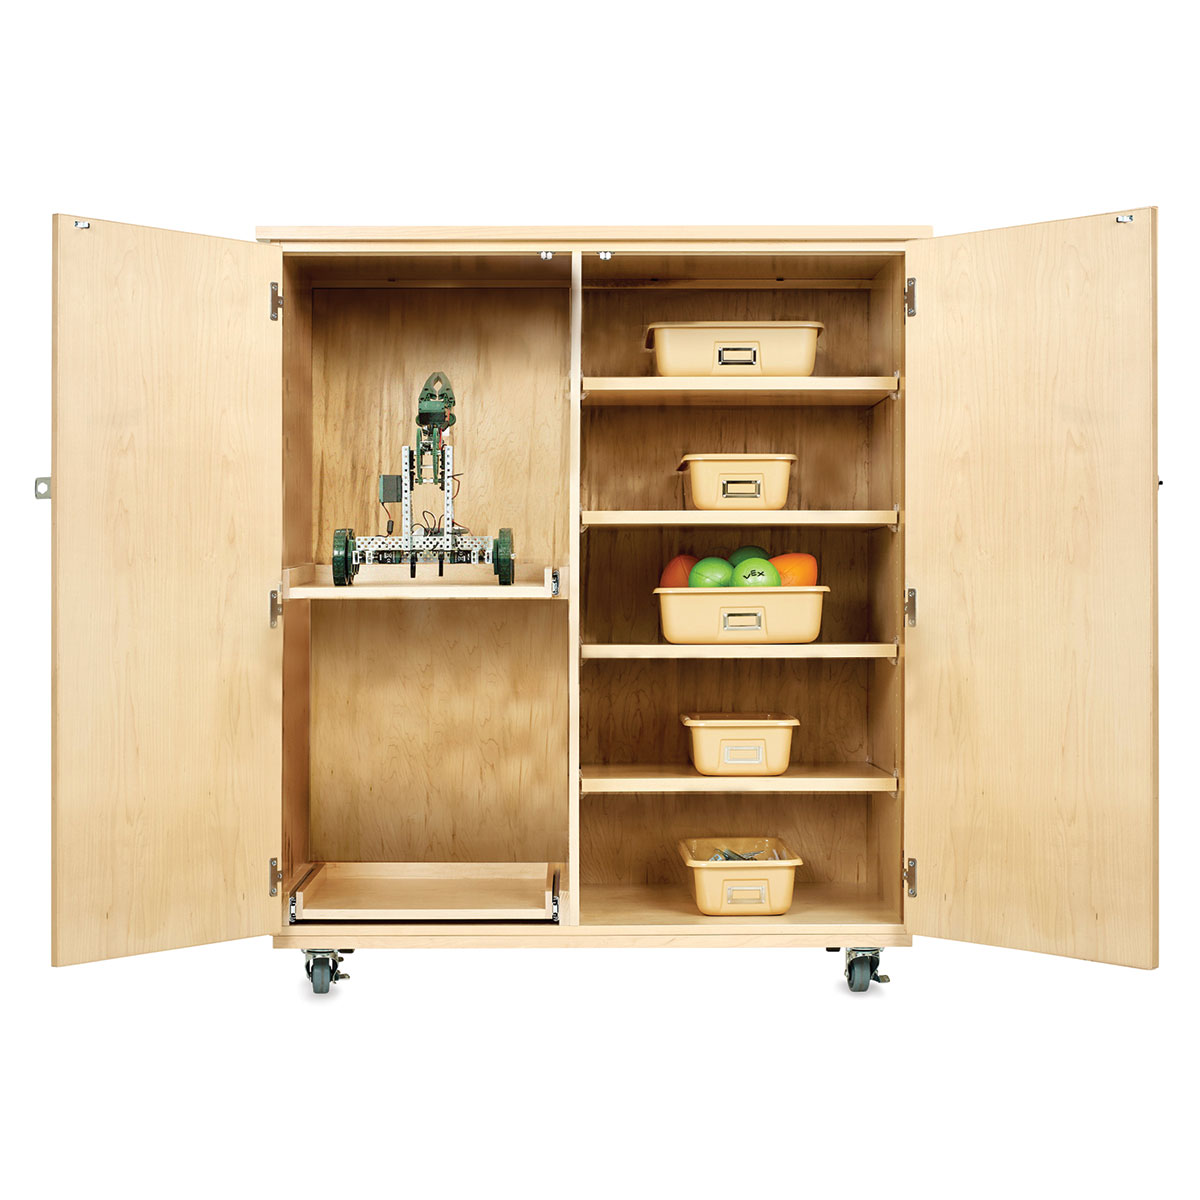 Classroom Cabinets & Storage, Tote Storage Shelves